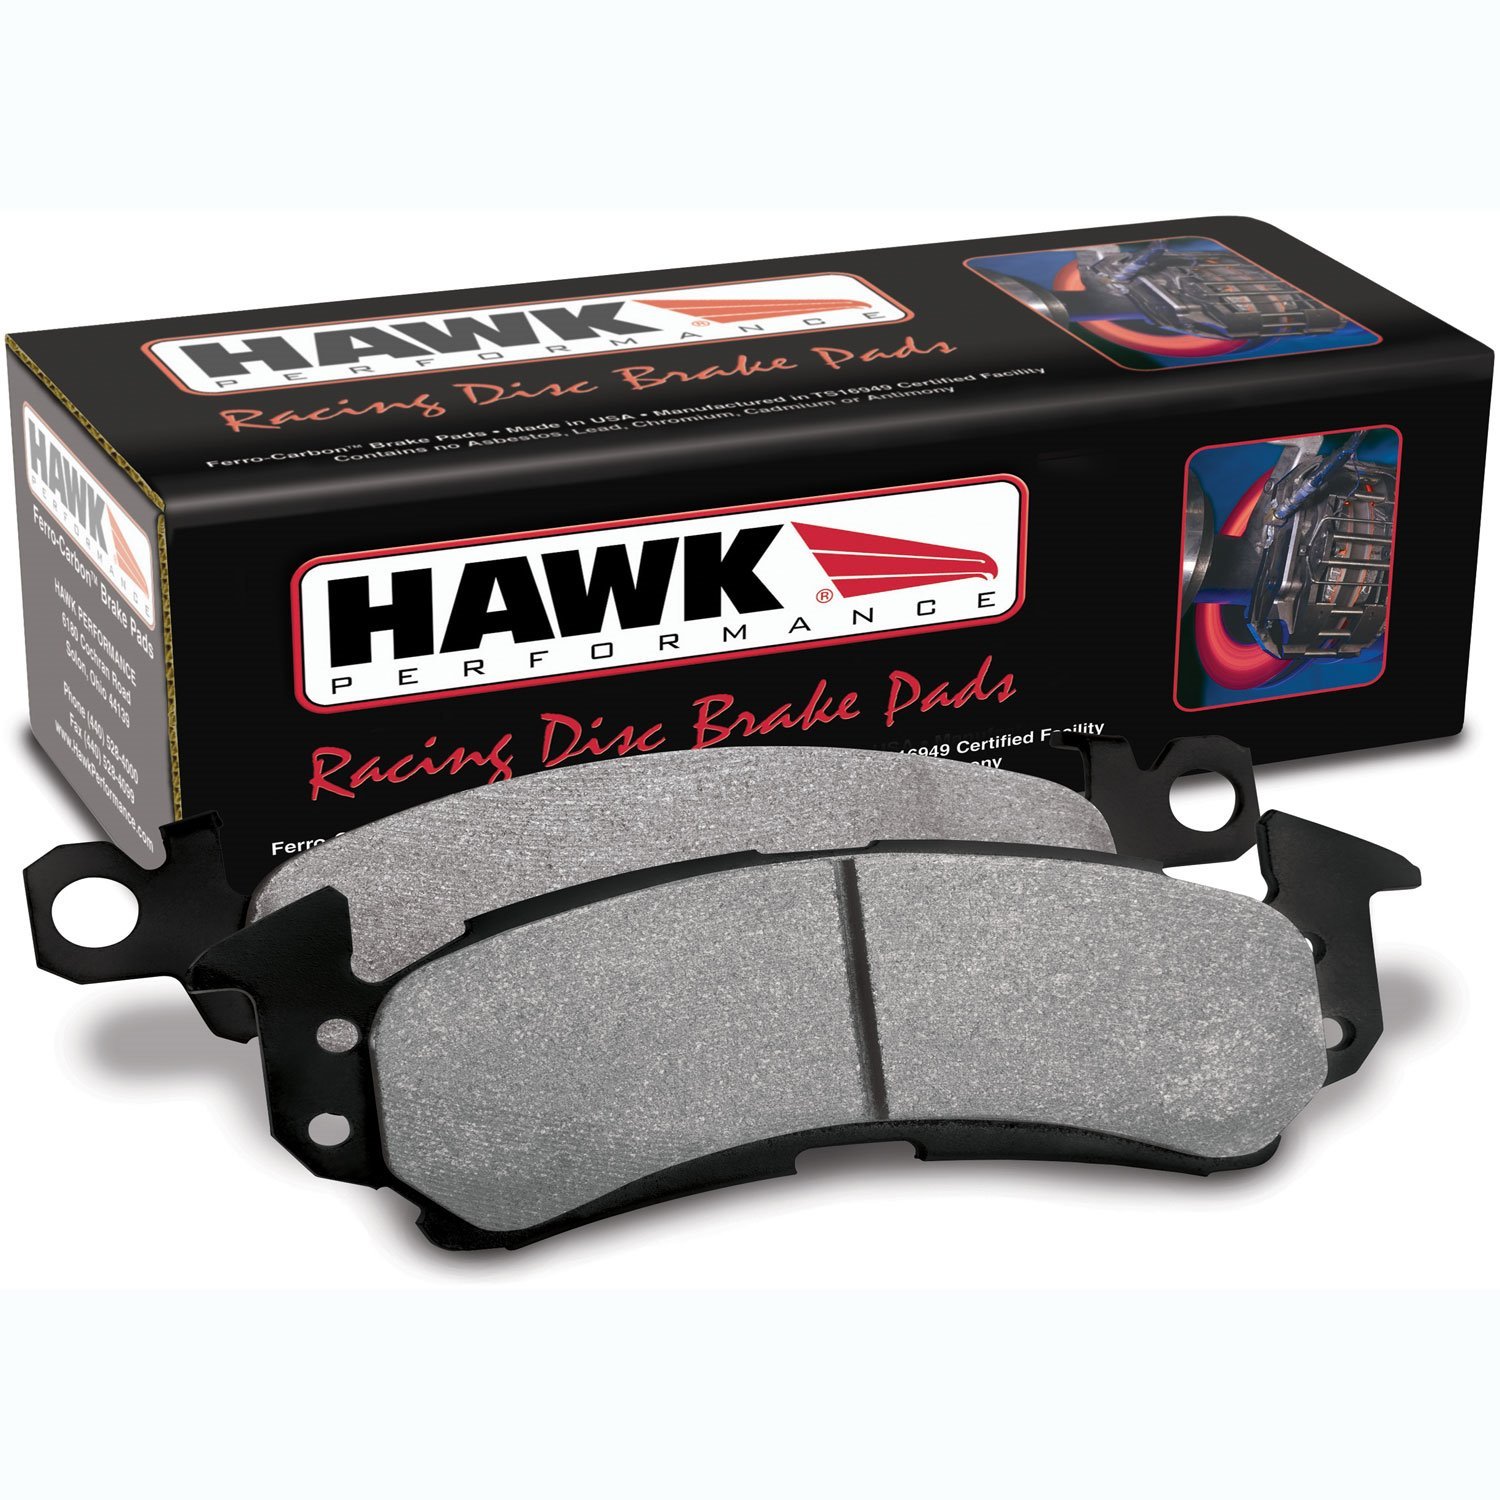 Disc Brake Pad HP Plus w/0.667 Thickness